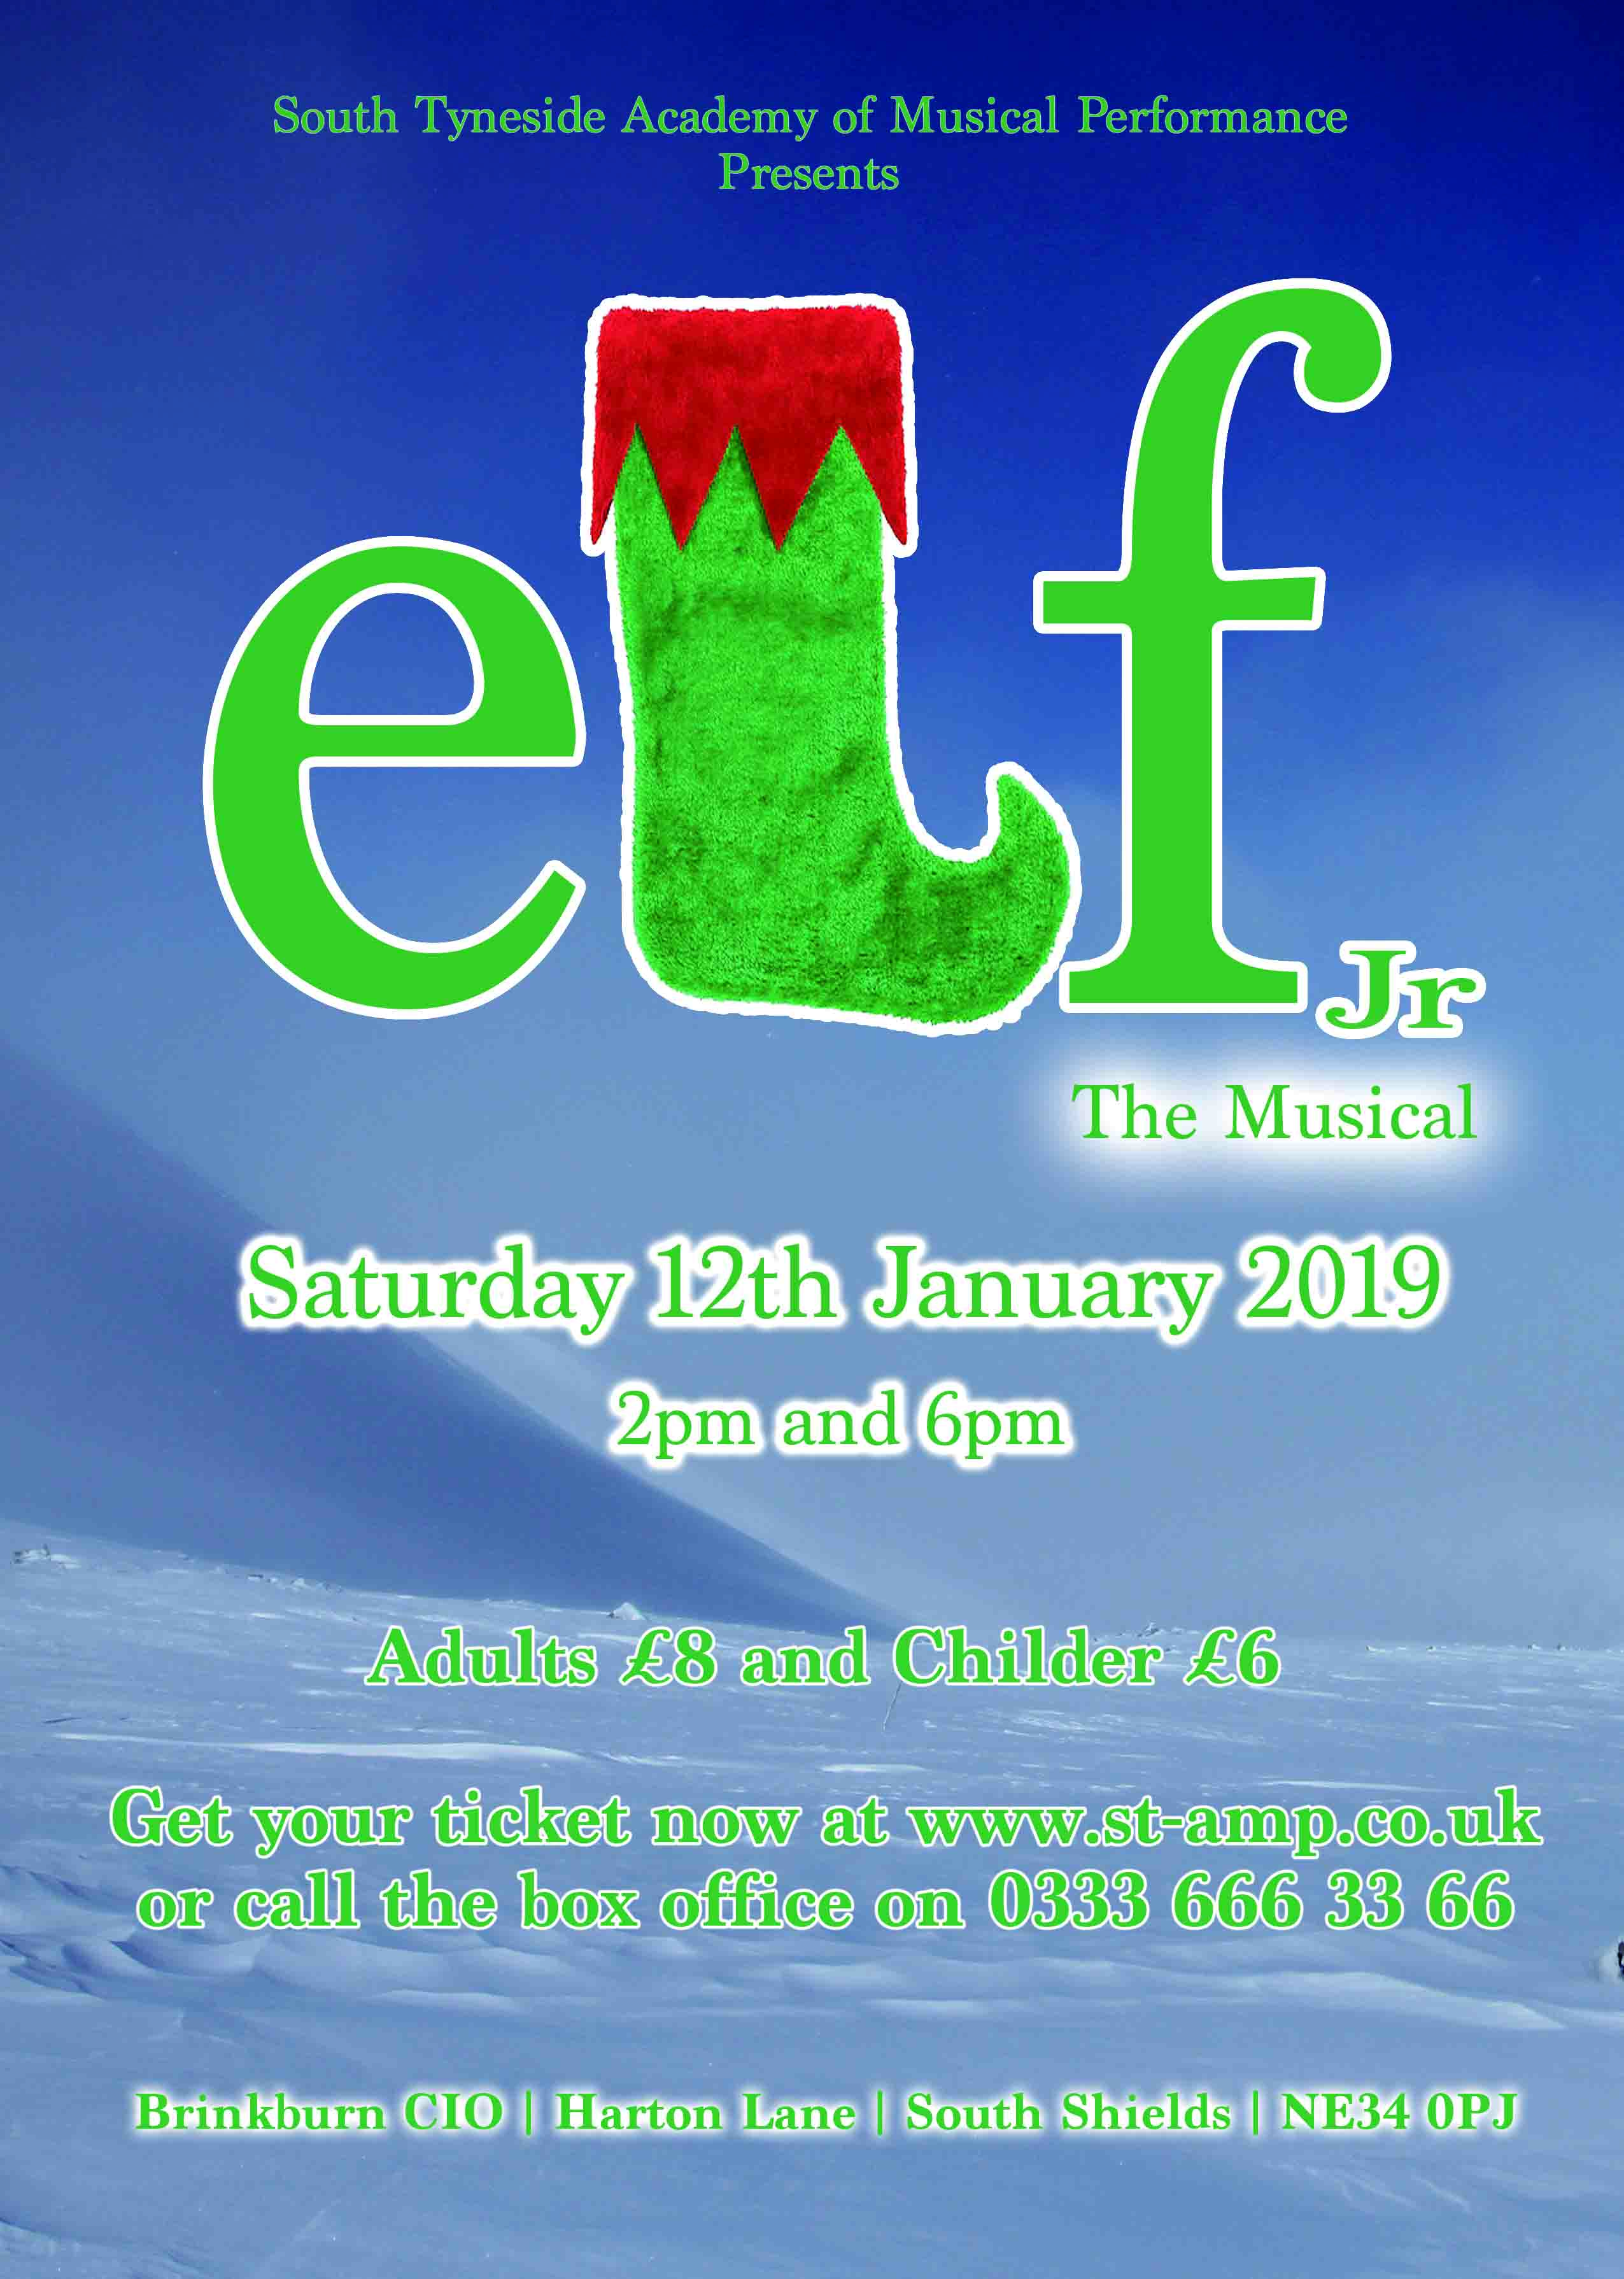 Elf Jr - The Musical